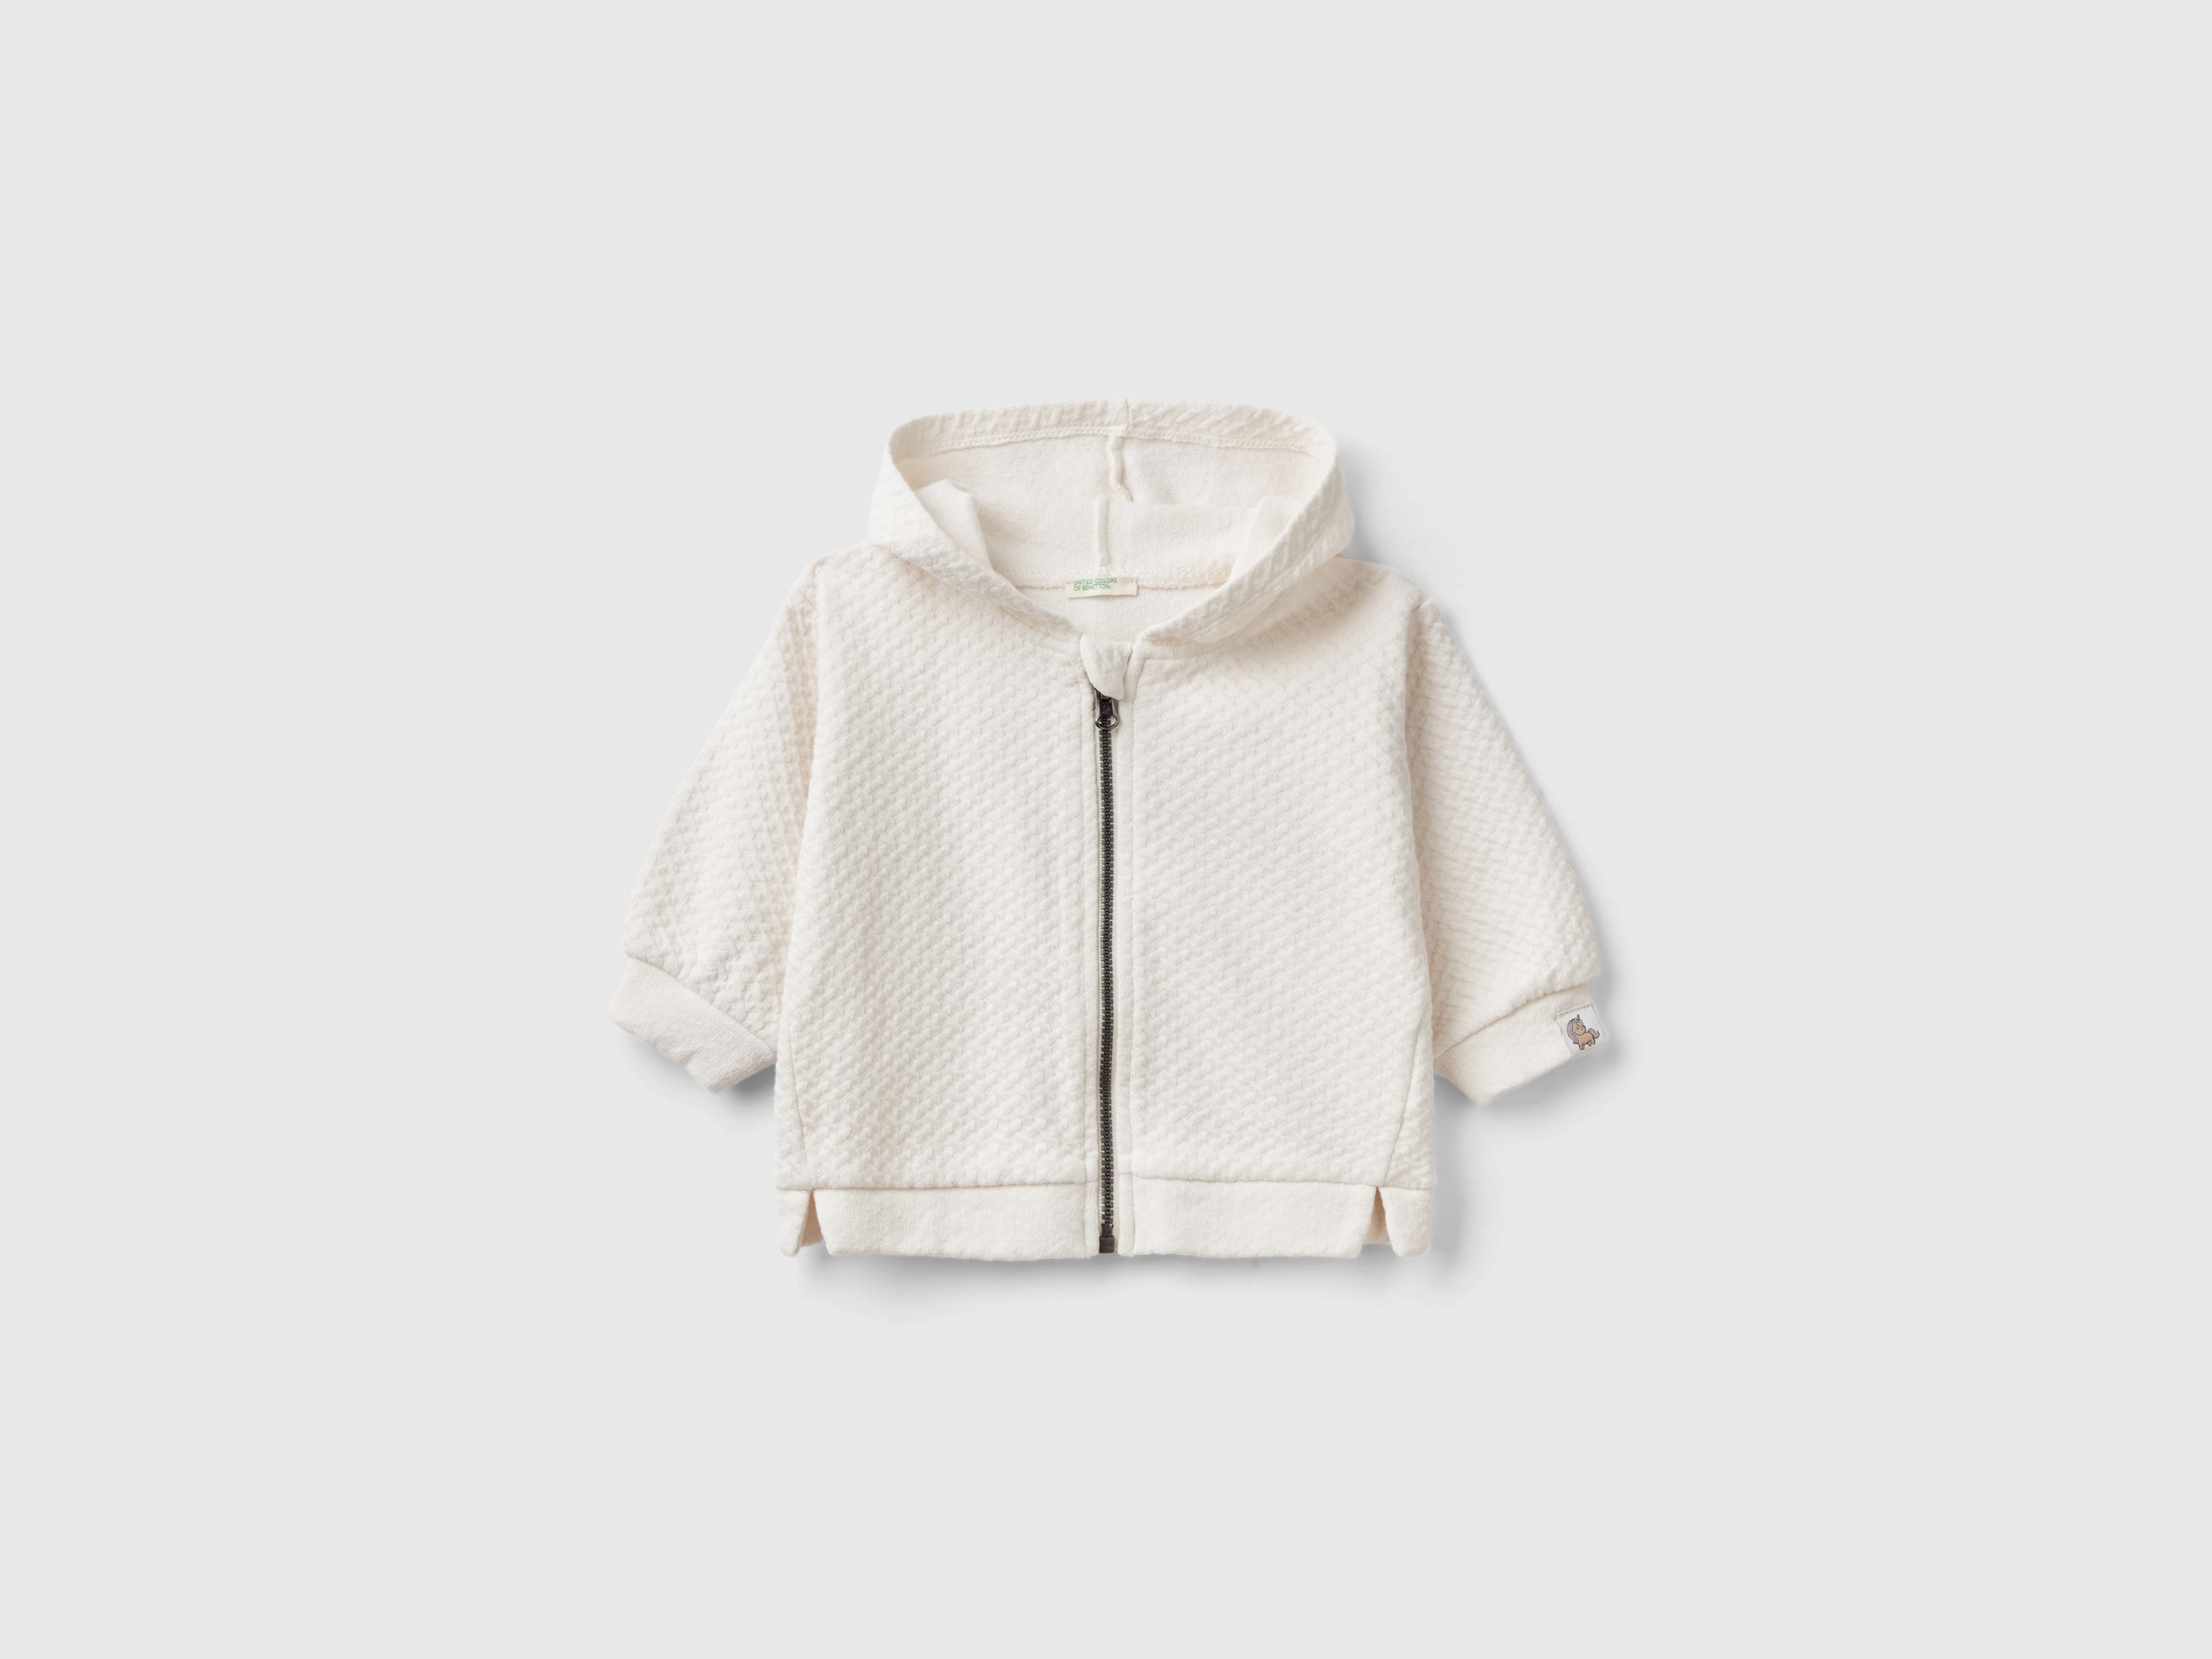 Image of Benetton, Jacquard Zip-up Hoodie, size 50, Creamy White, Kids